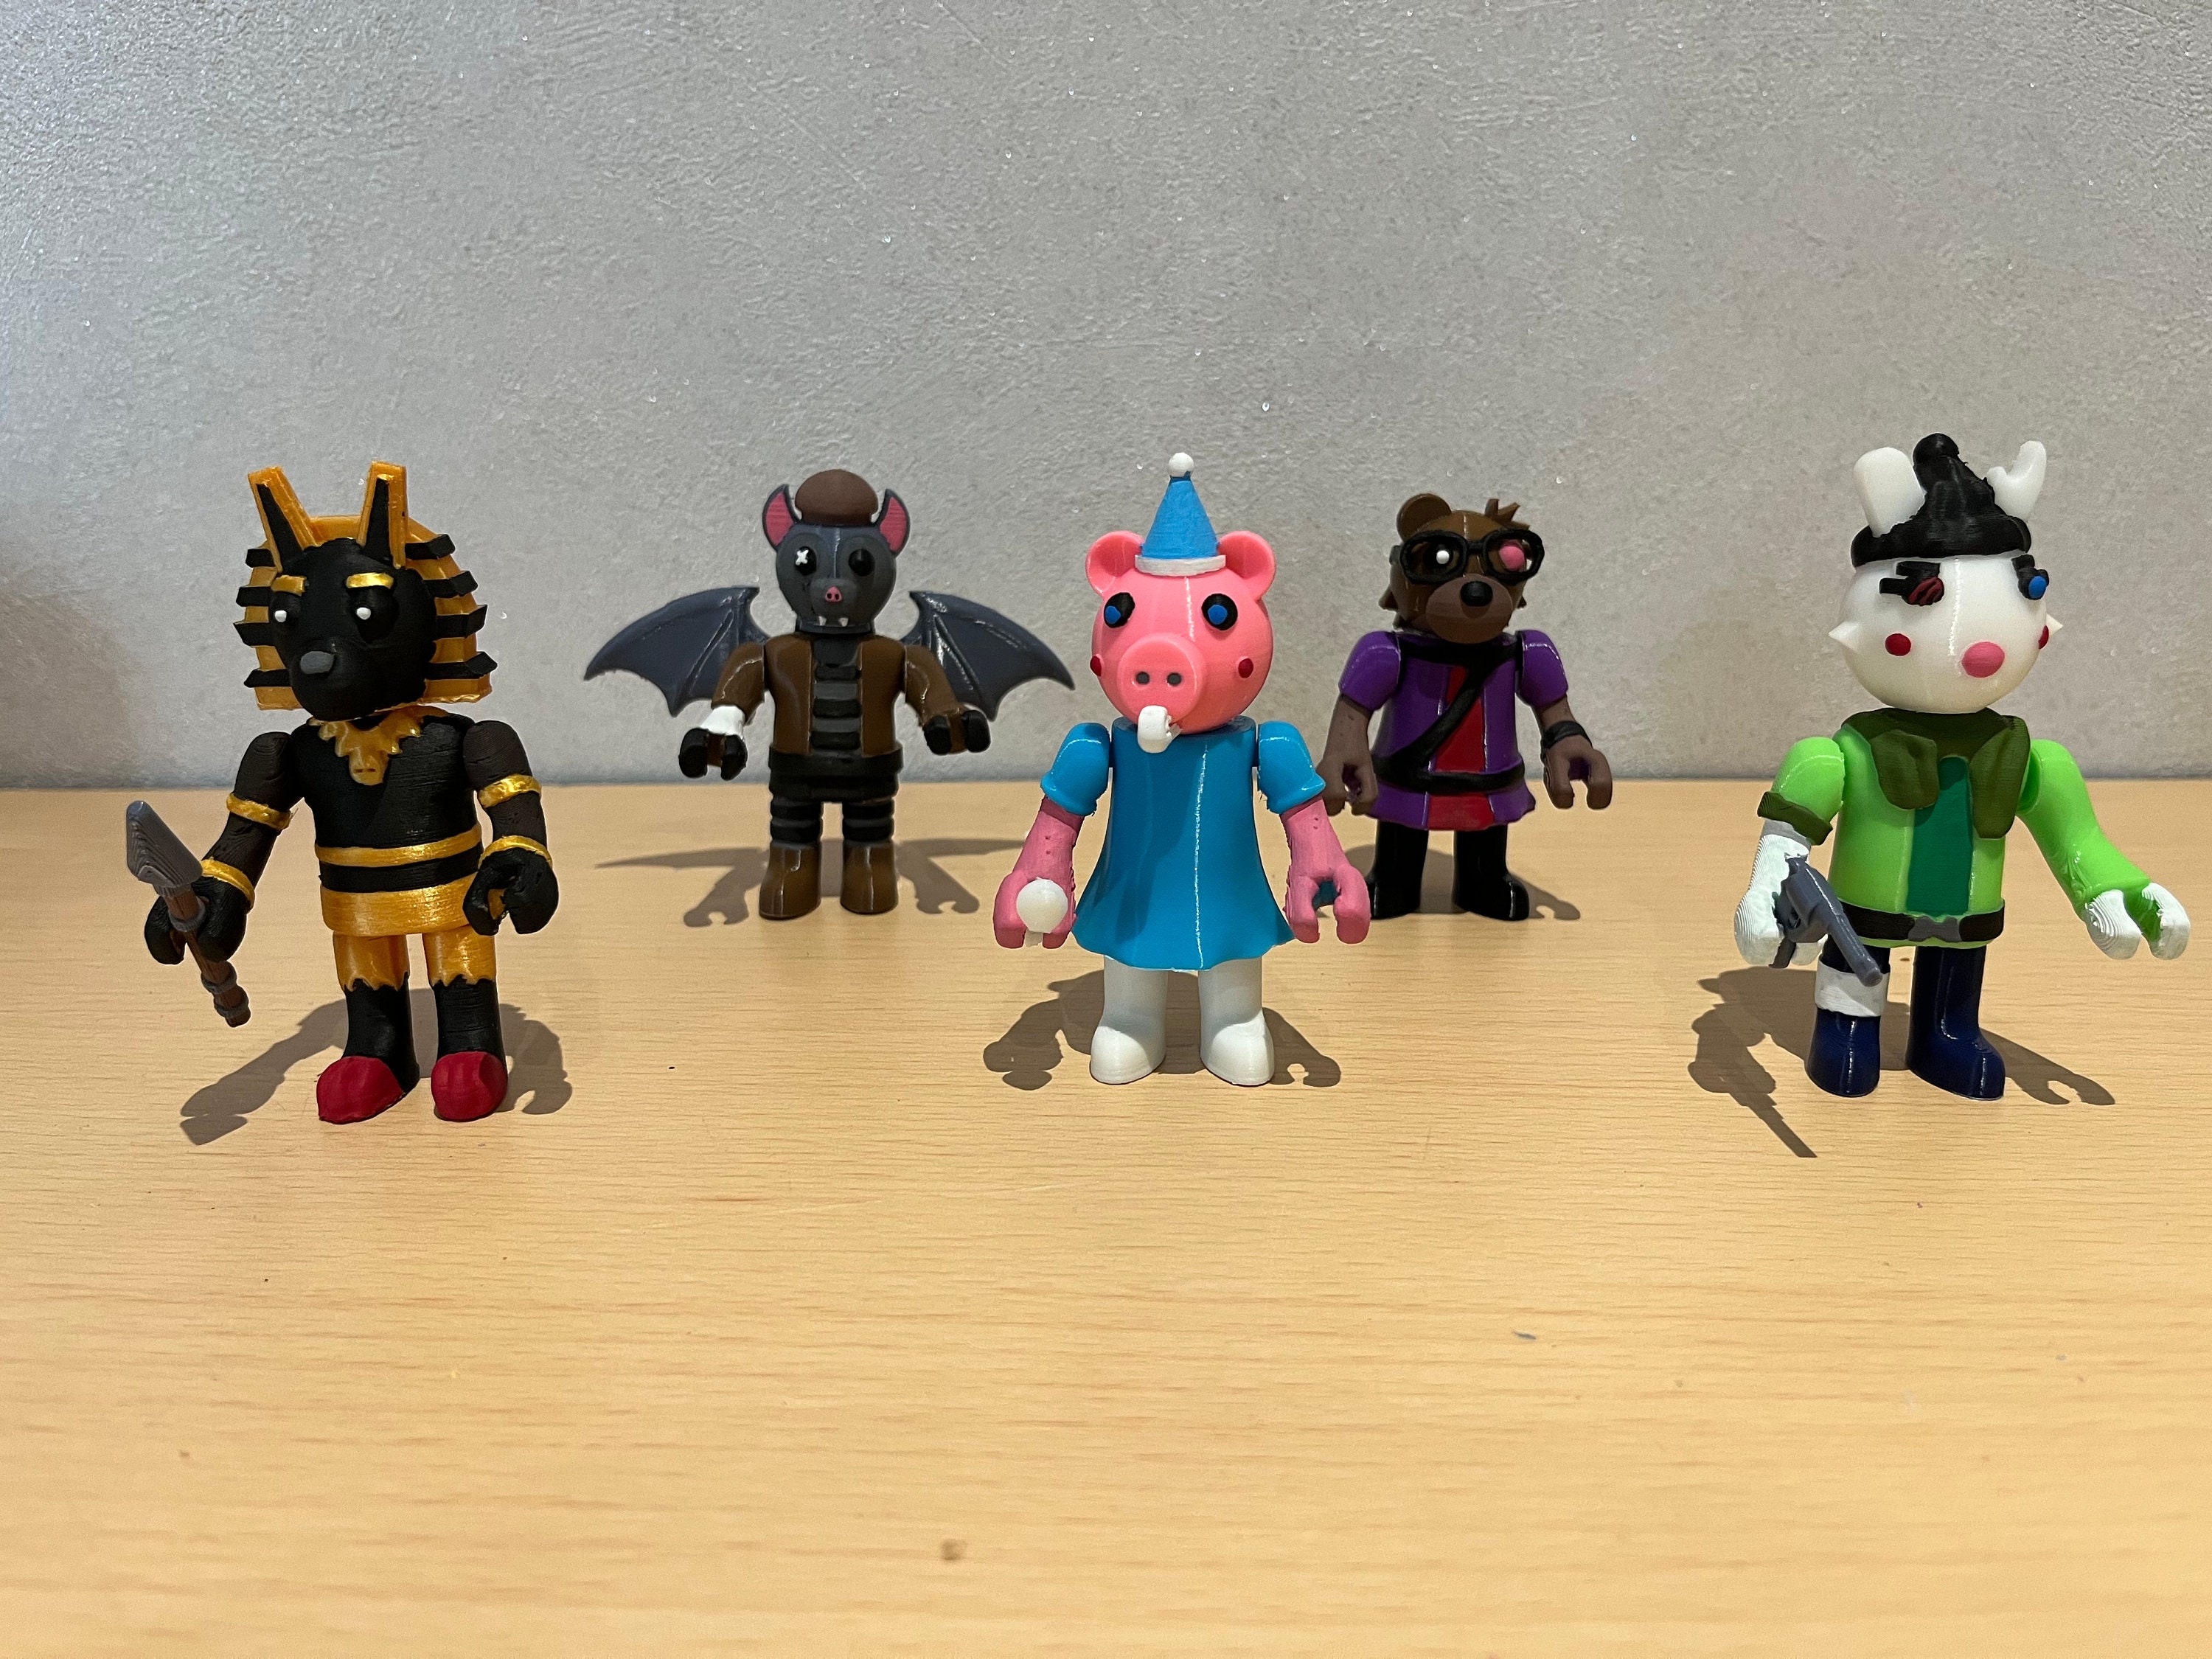 Piggy Mini Toon The Piggy Characters Series 2 PhatMojo Roblox New In Box  2021